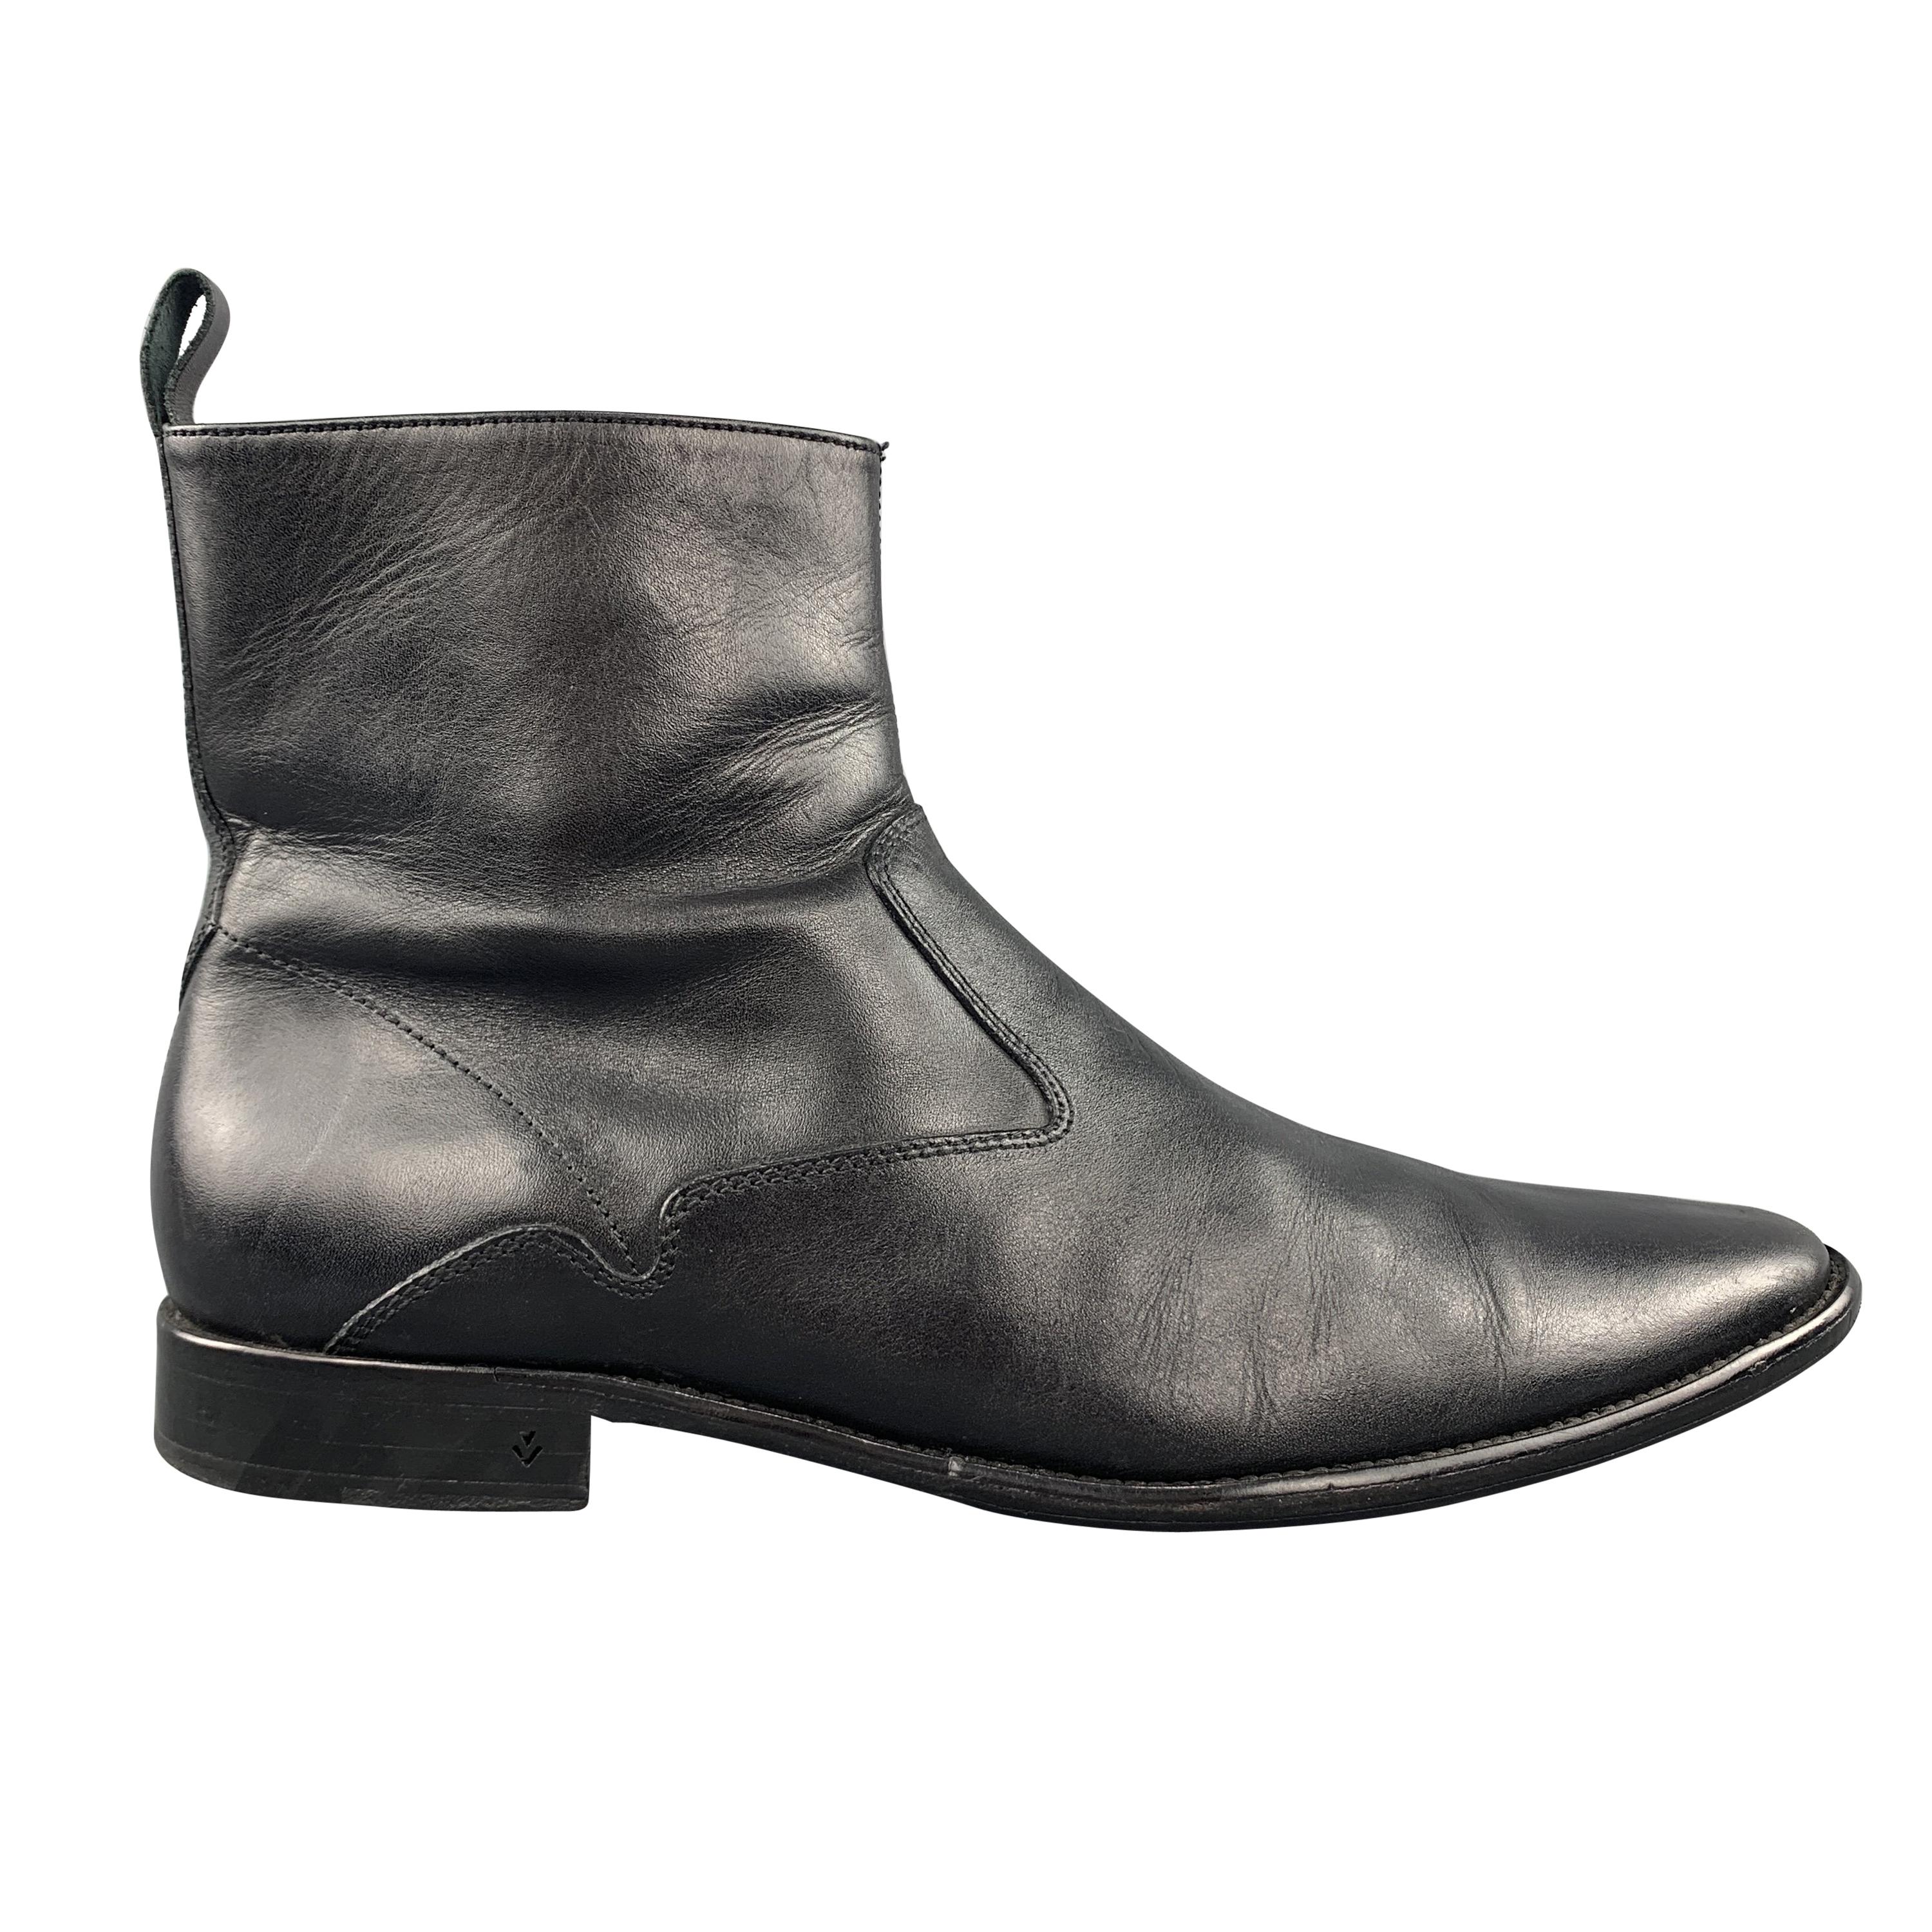 JOHN VARVATOS Size 9.5 Black Leather Side Zipper Ankle Boots